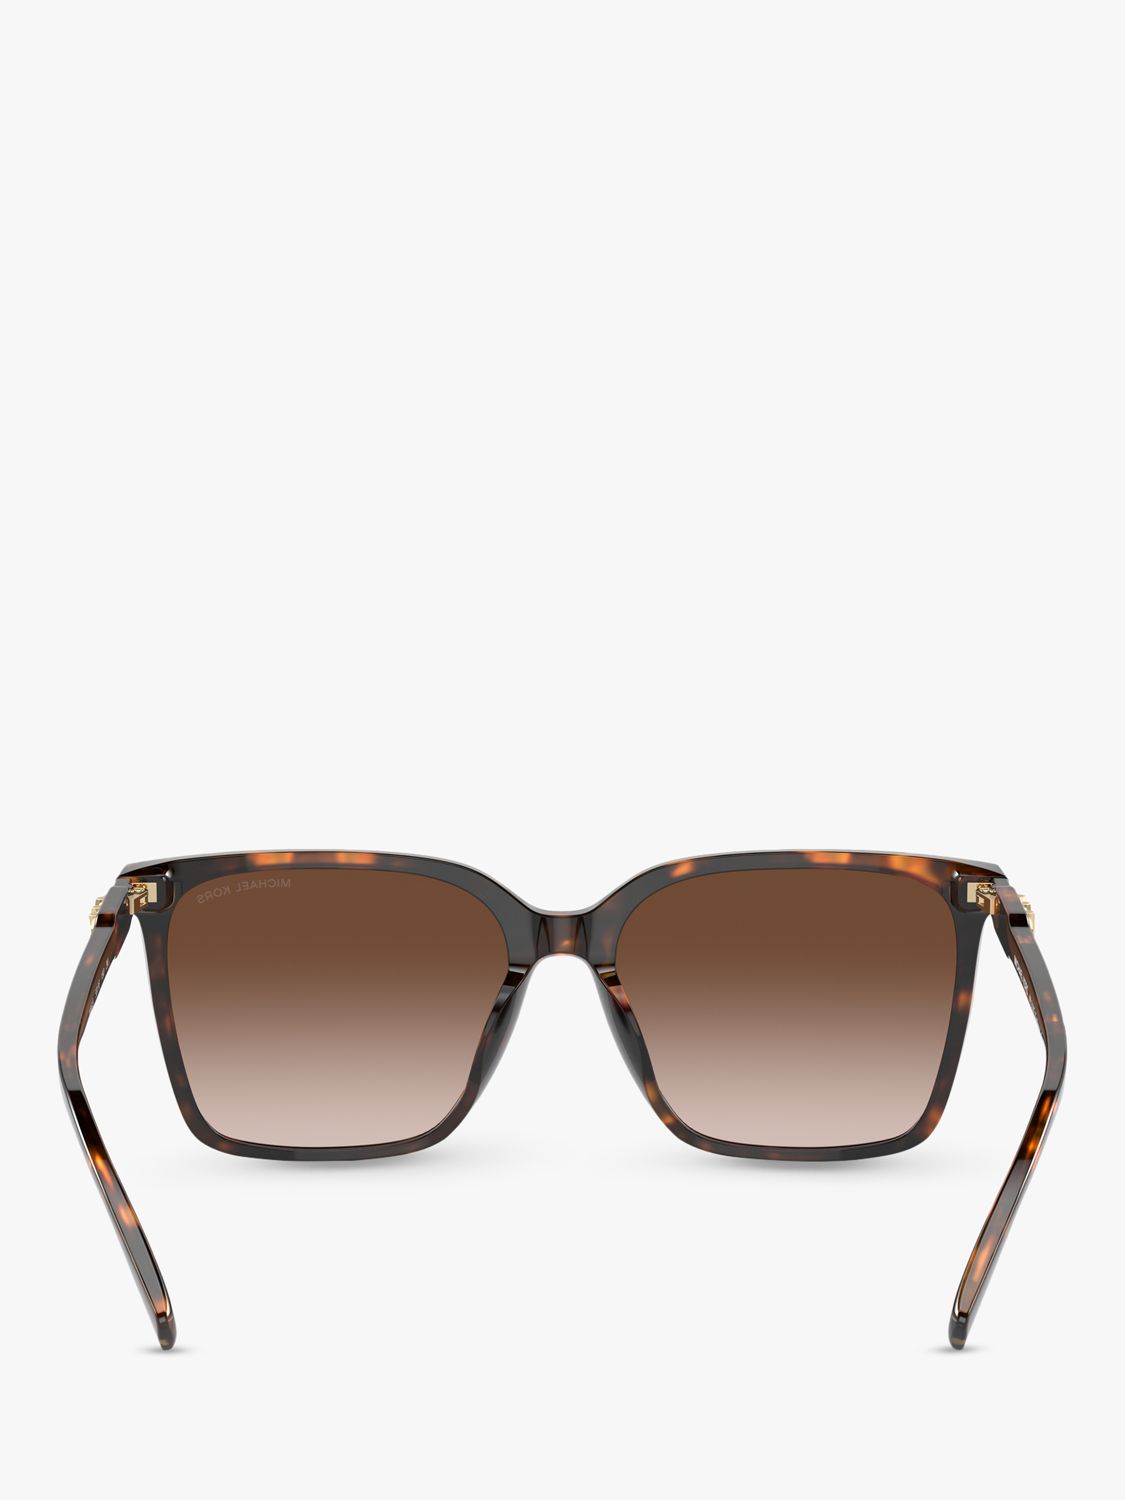 Buy Michael Kors MK2197F Women's Canberra Square Sunglasses, Dark Tortoise/Brown Gradient Online at johnlewis.com